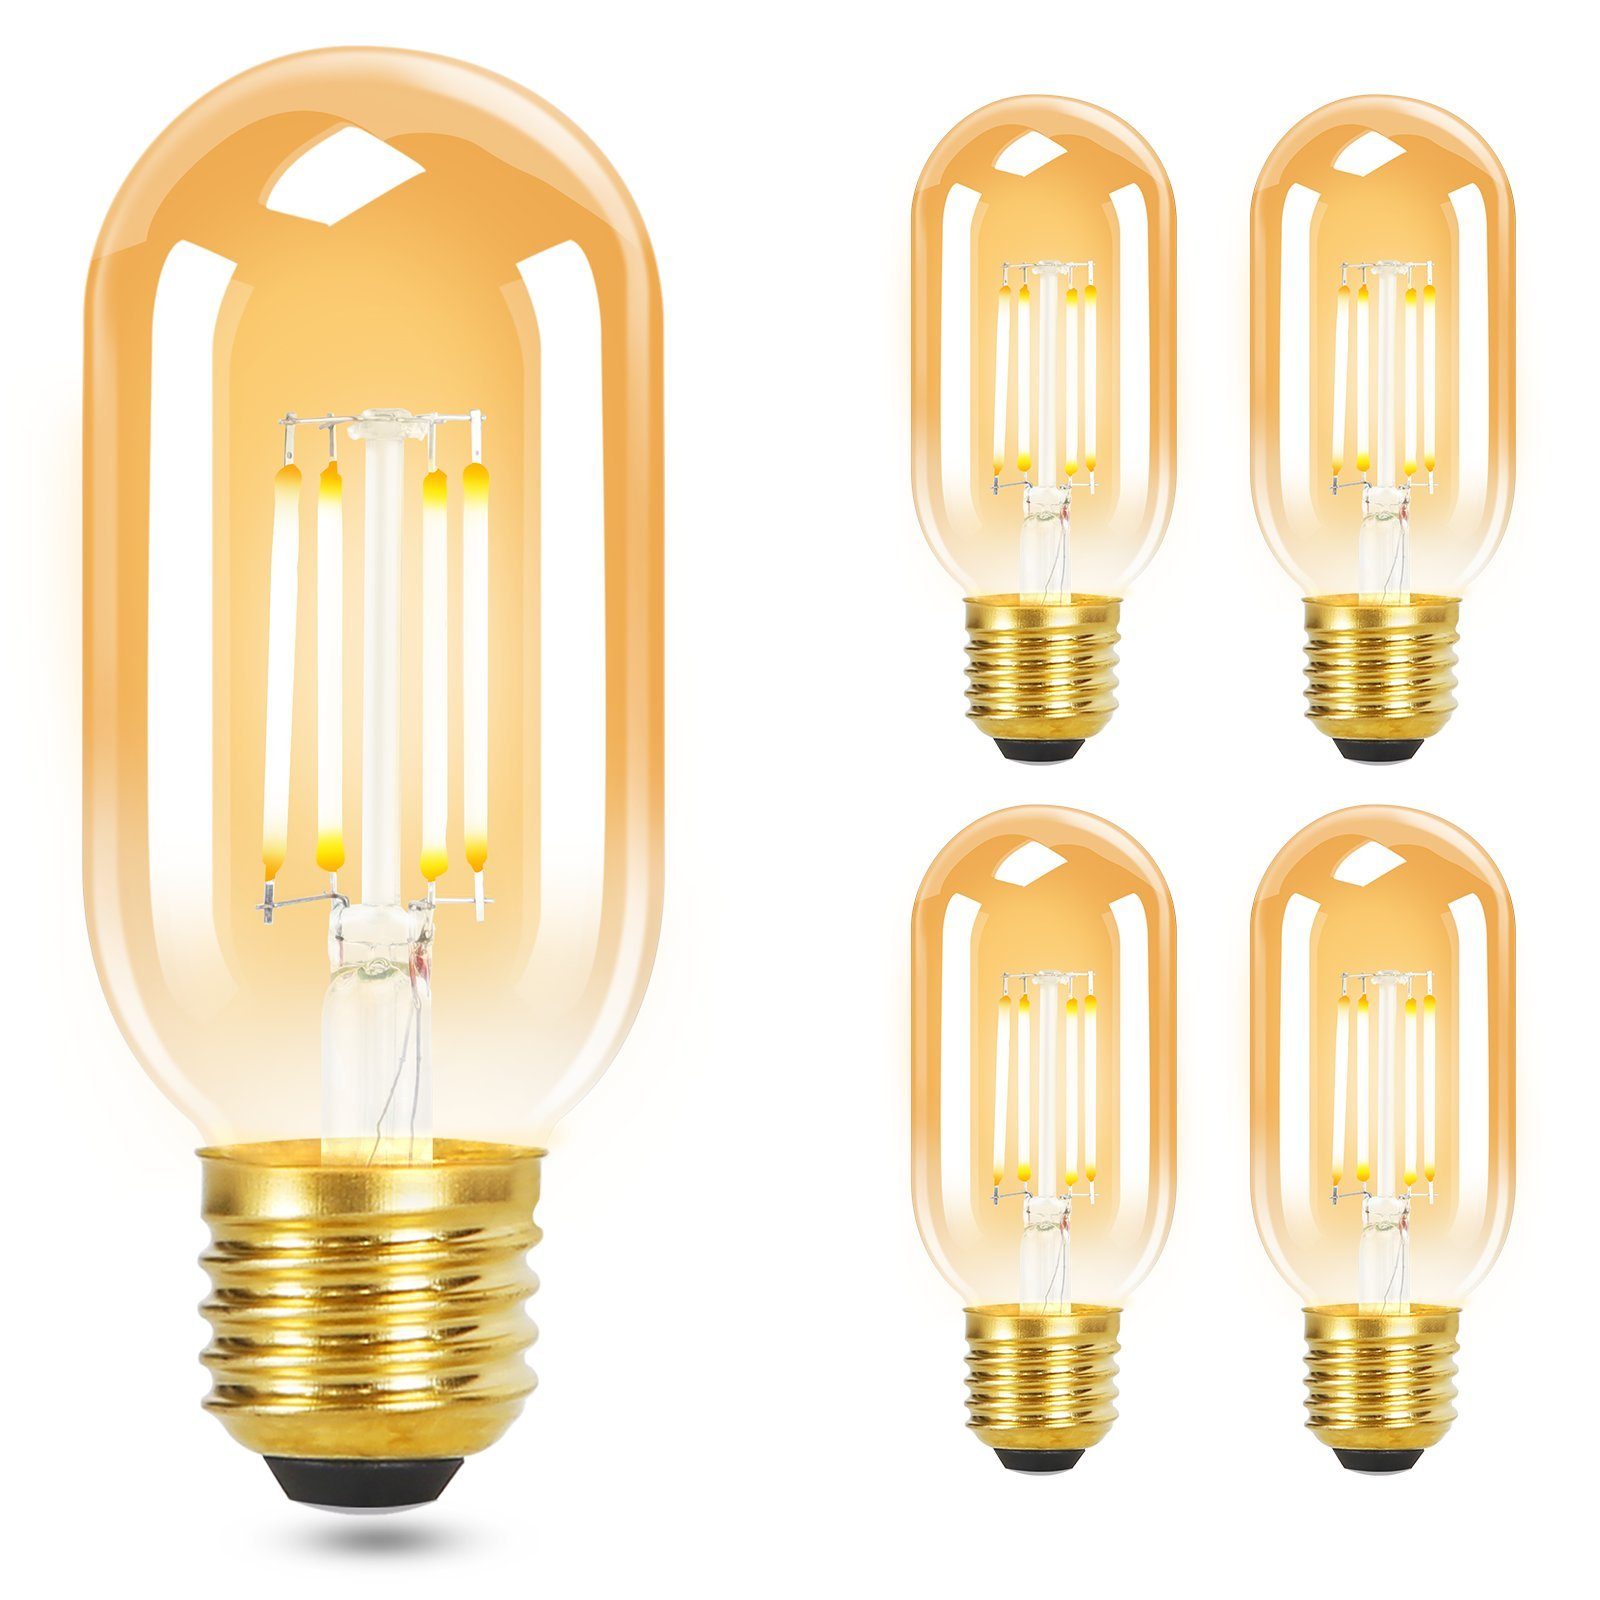 Nettlife LED-Leuchtmittel LED 4W E27 Warmweiss E27, Vintage 4 2700K, Warmweiss T45 Bernsteinfarbene Edison Lampe Birnen St., Glühbirnen